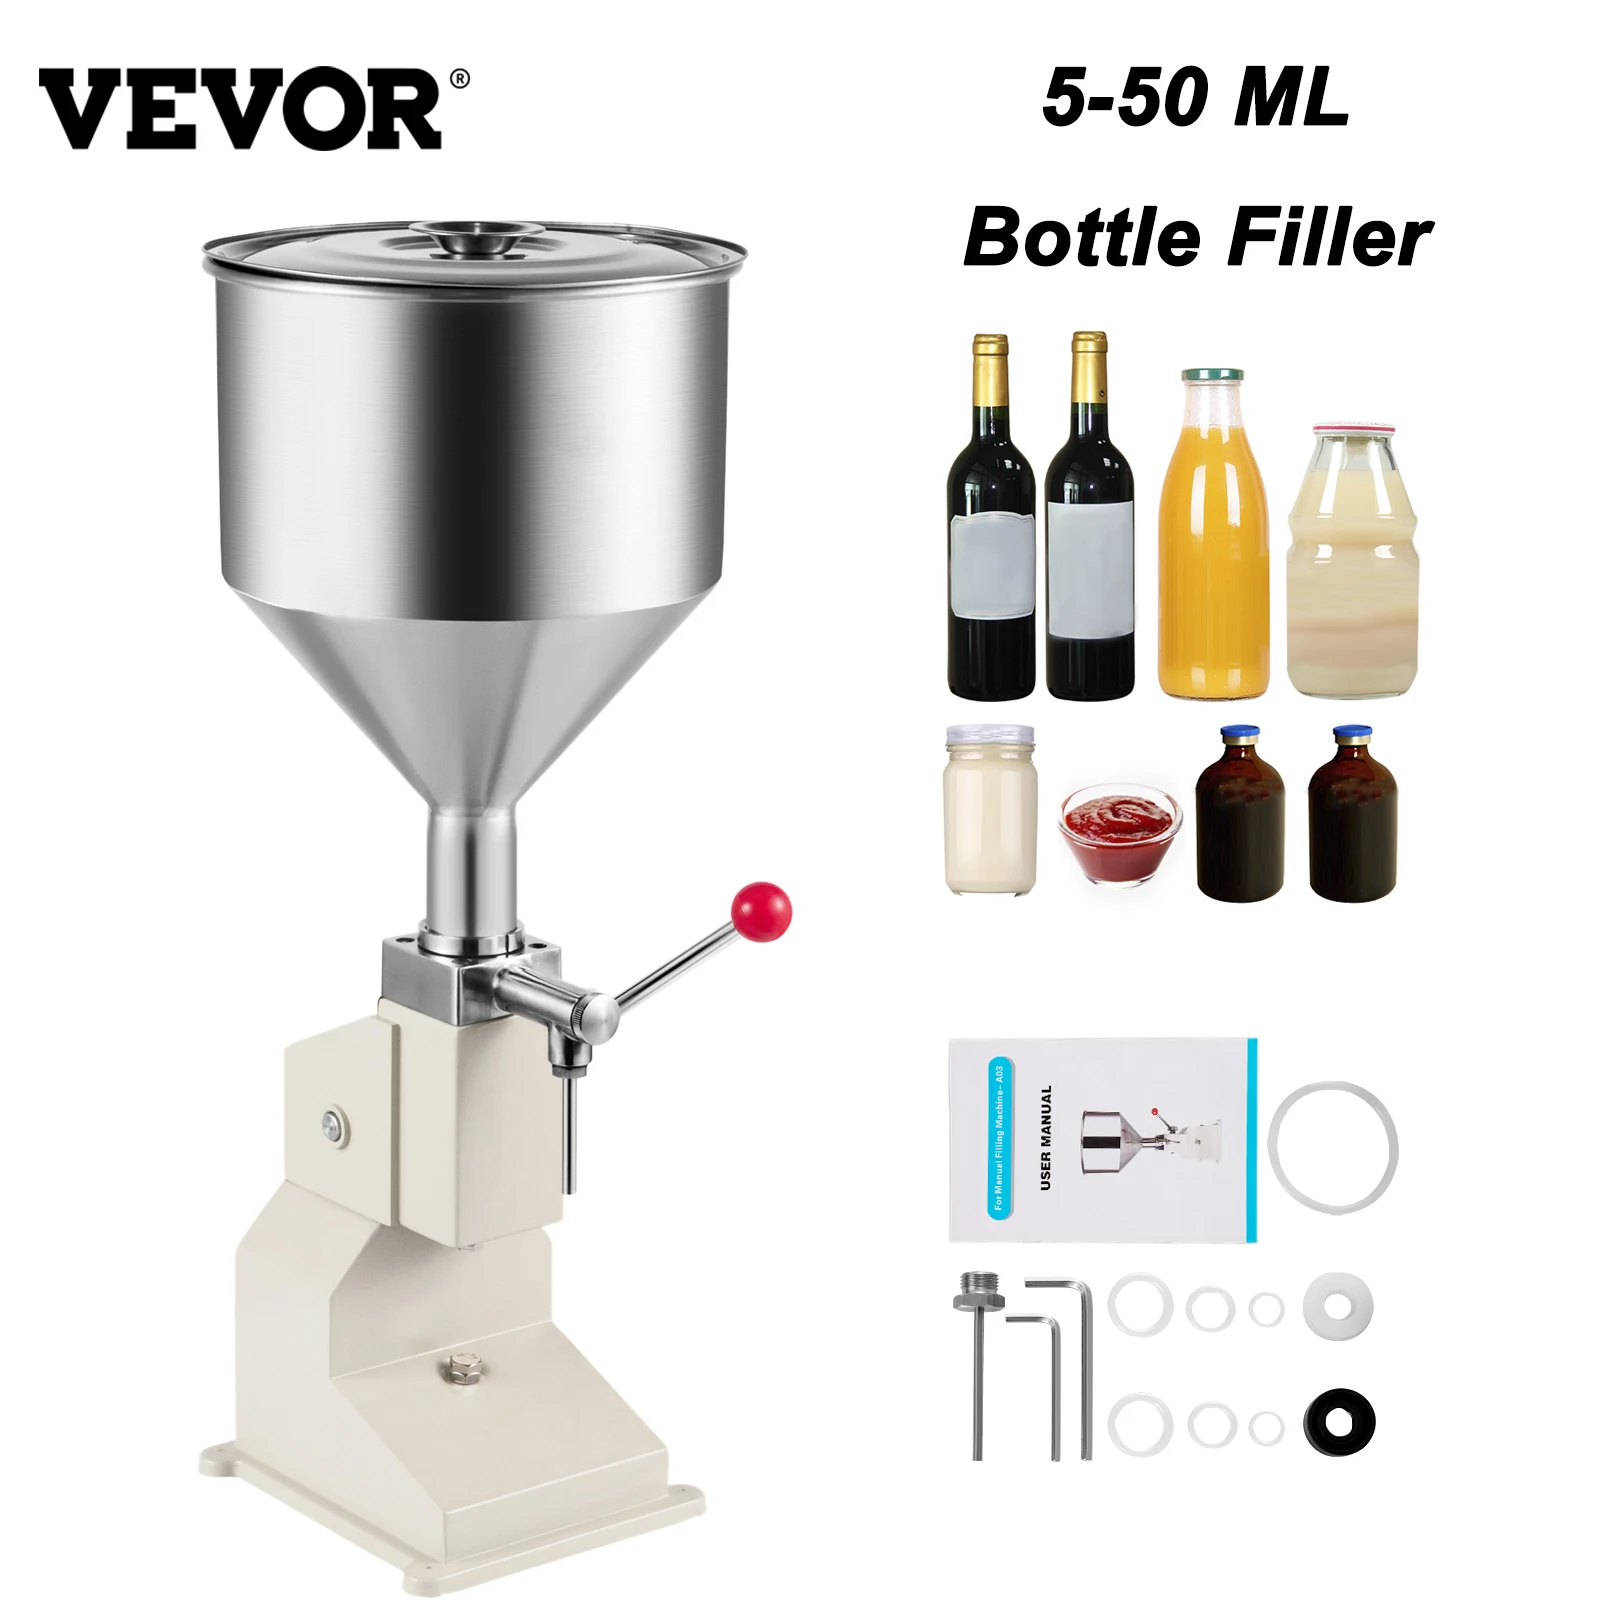 

VEVOR 5-50 ML Adjustable Manual Liquid Filling Machine 10L Commercial Liquid Dispenser A03 Bottle Filler for Paste Cosmetic Oil